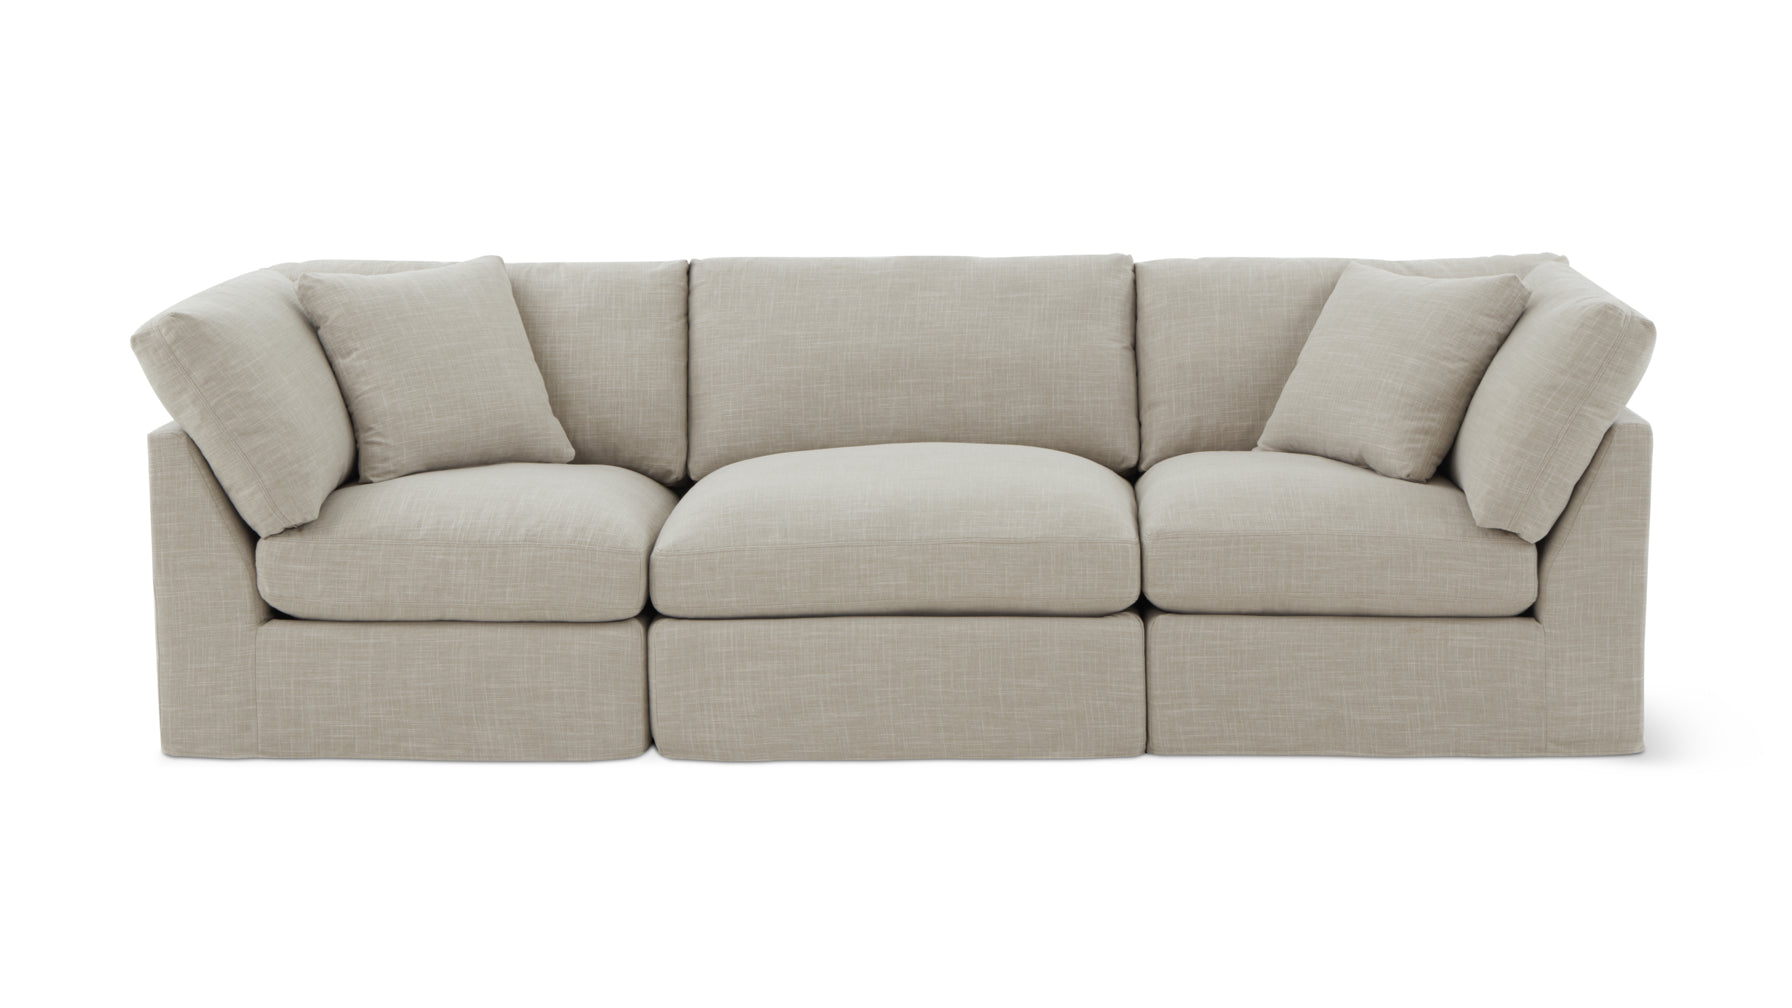 Get Together™ 3-Piece Modular Sofa, Standard, Light Pebble - Image 1